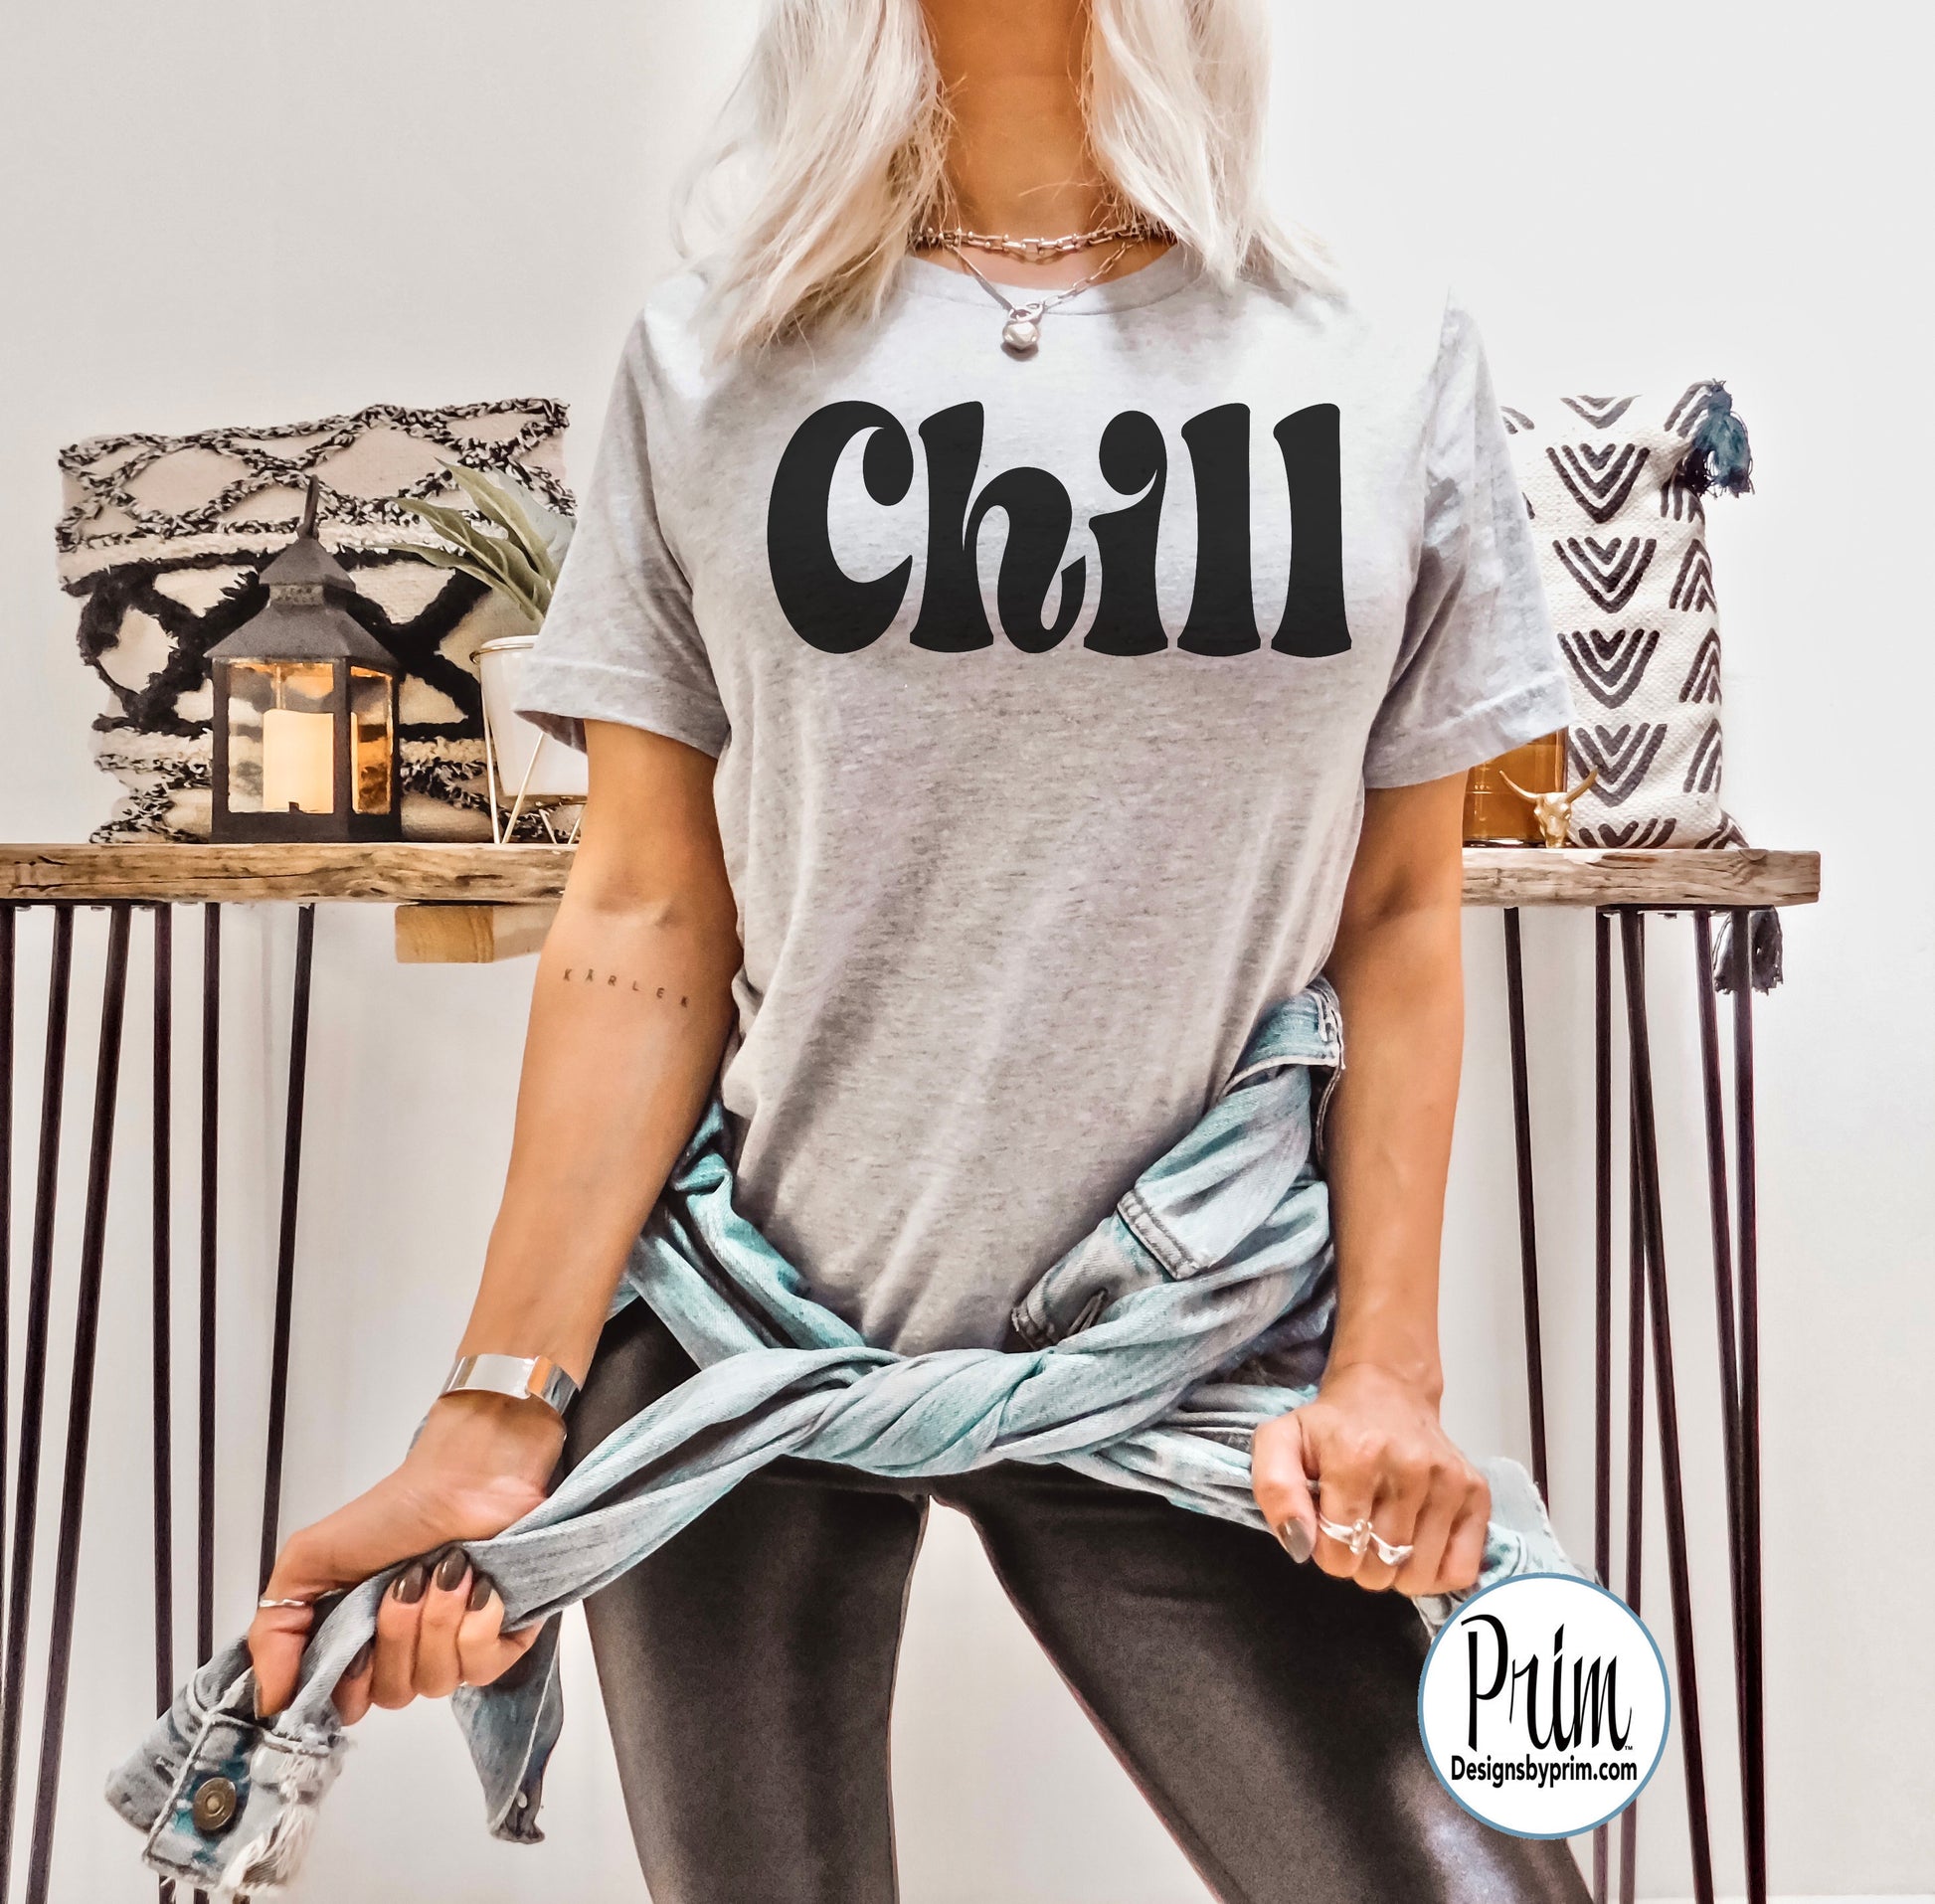 Designs by Prim Chill Fun Soft Unisex T-Shirt | Calm Down Keep Calm Chilling Peace Zen Fun Graphic Tee Shirt Top